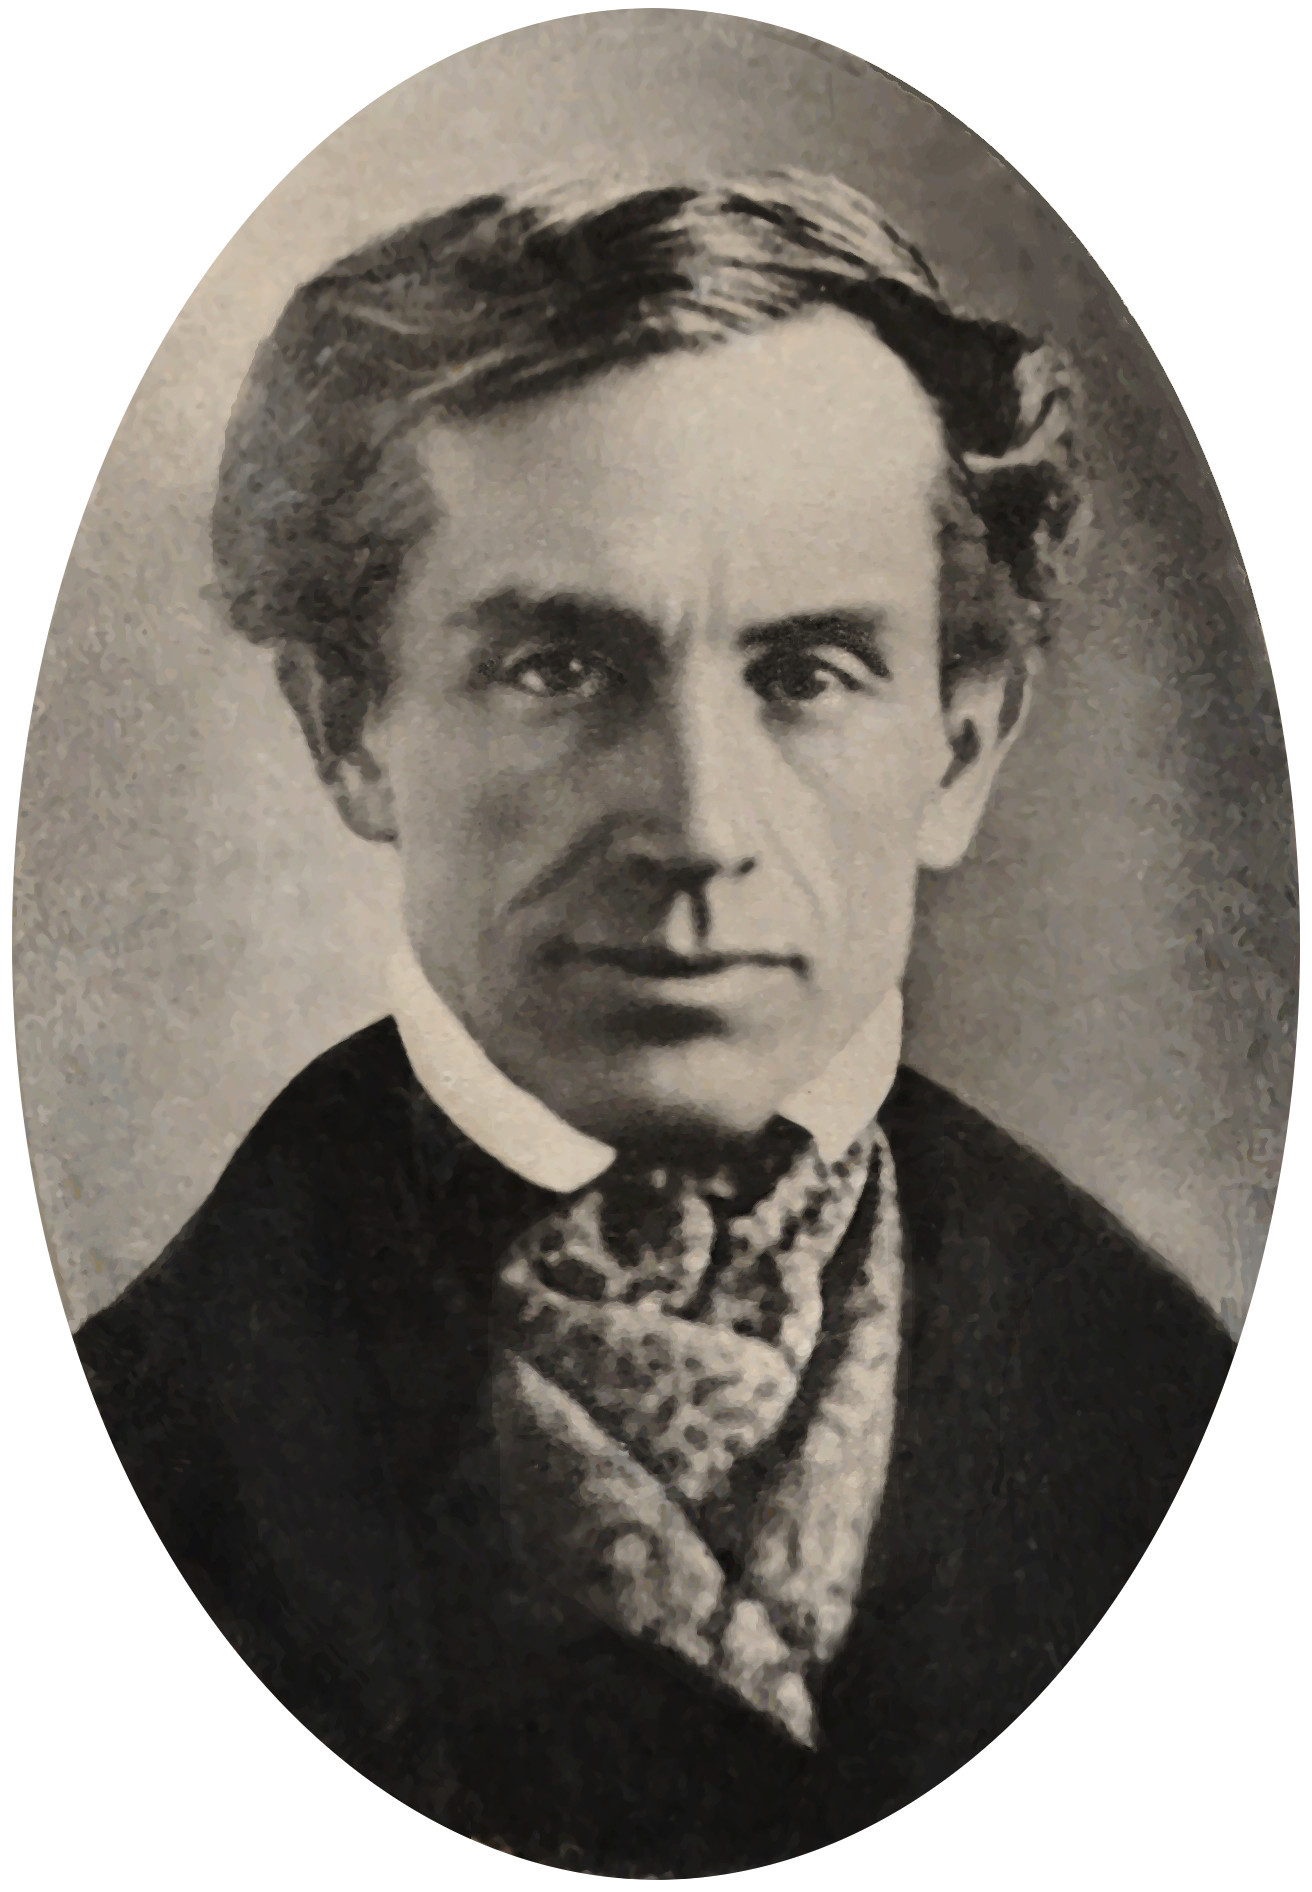 Photograph of Samuel Morse